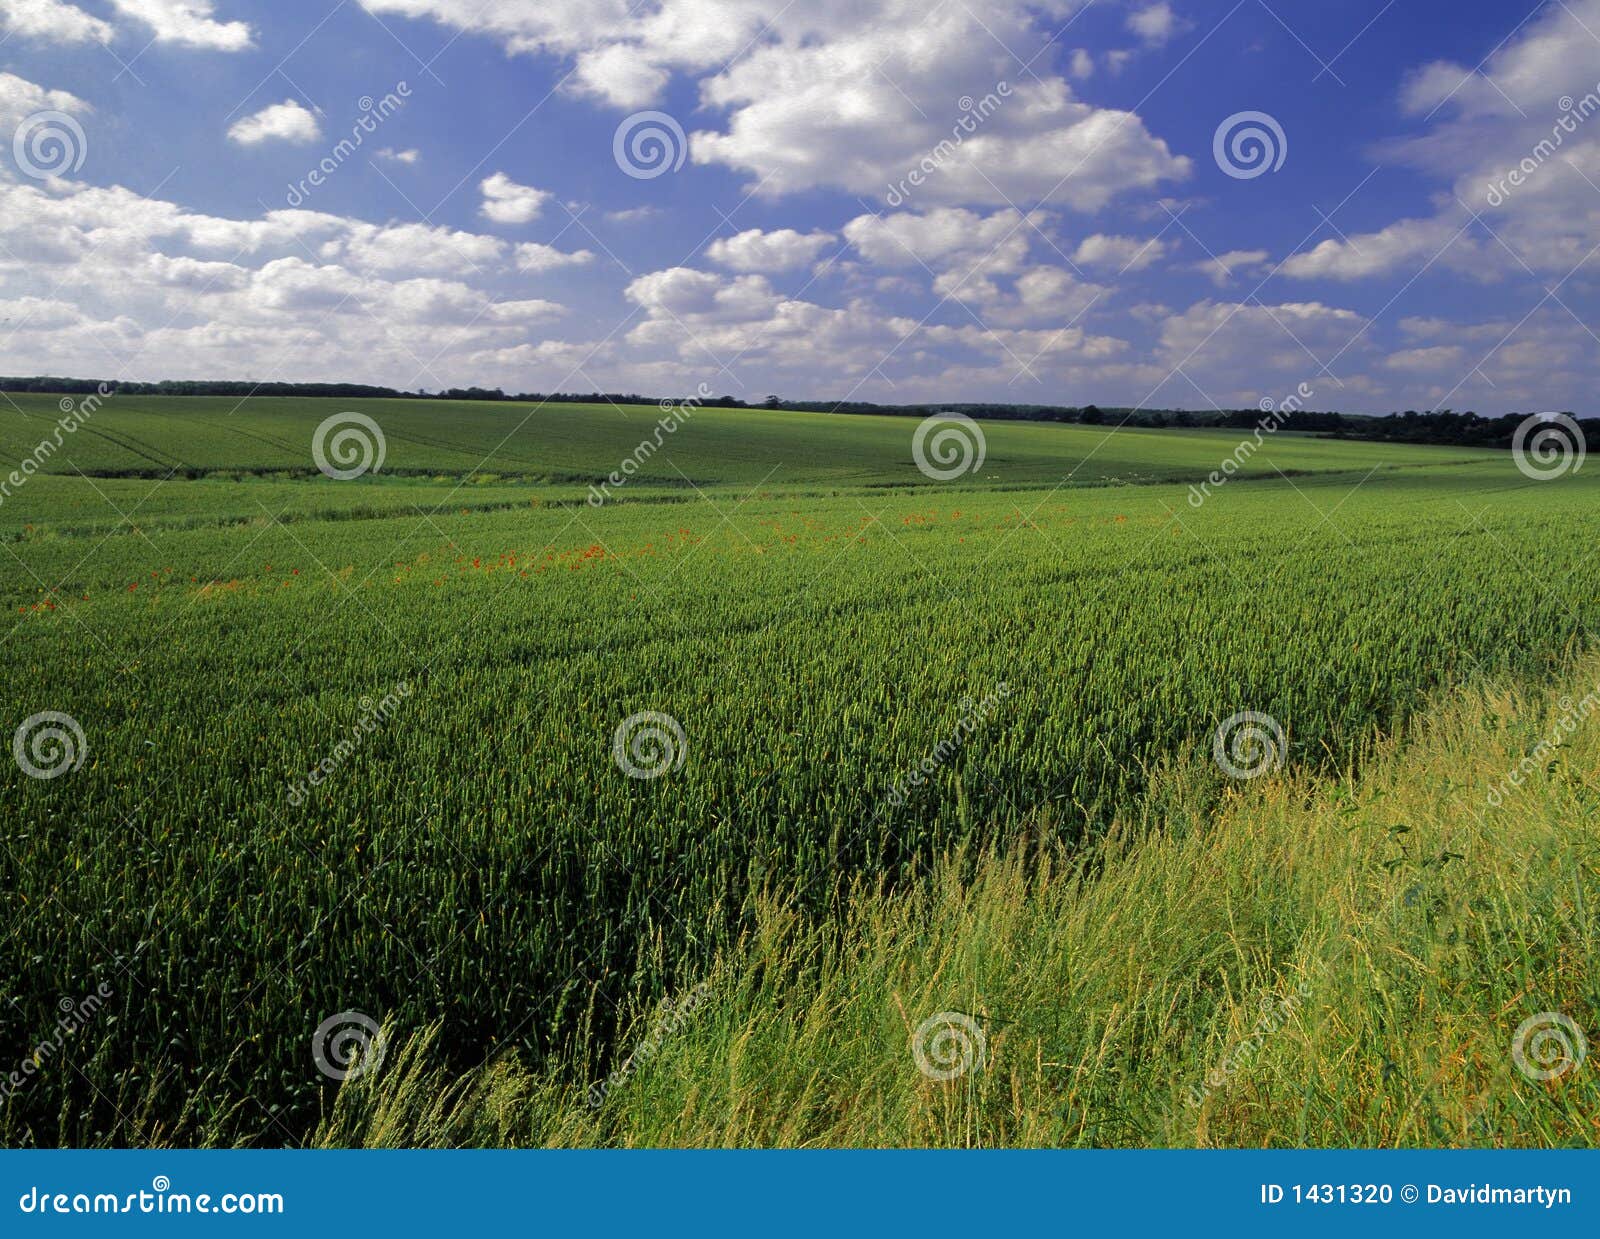 farmland with cereal crops